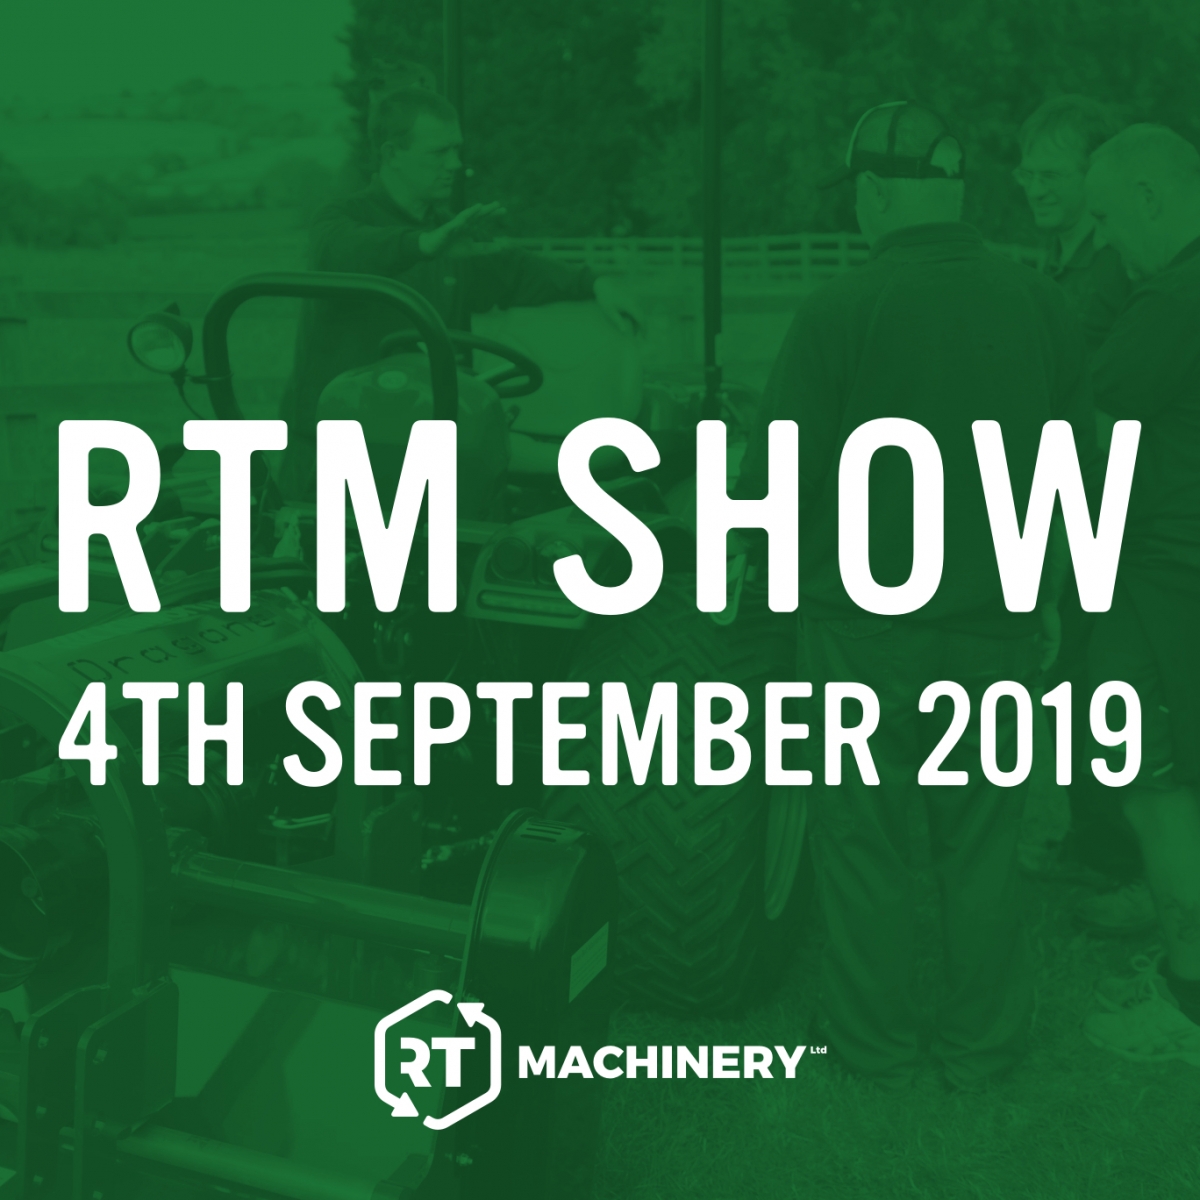 RTM Show 2019